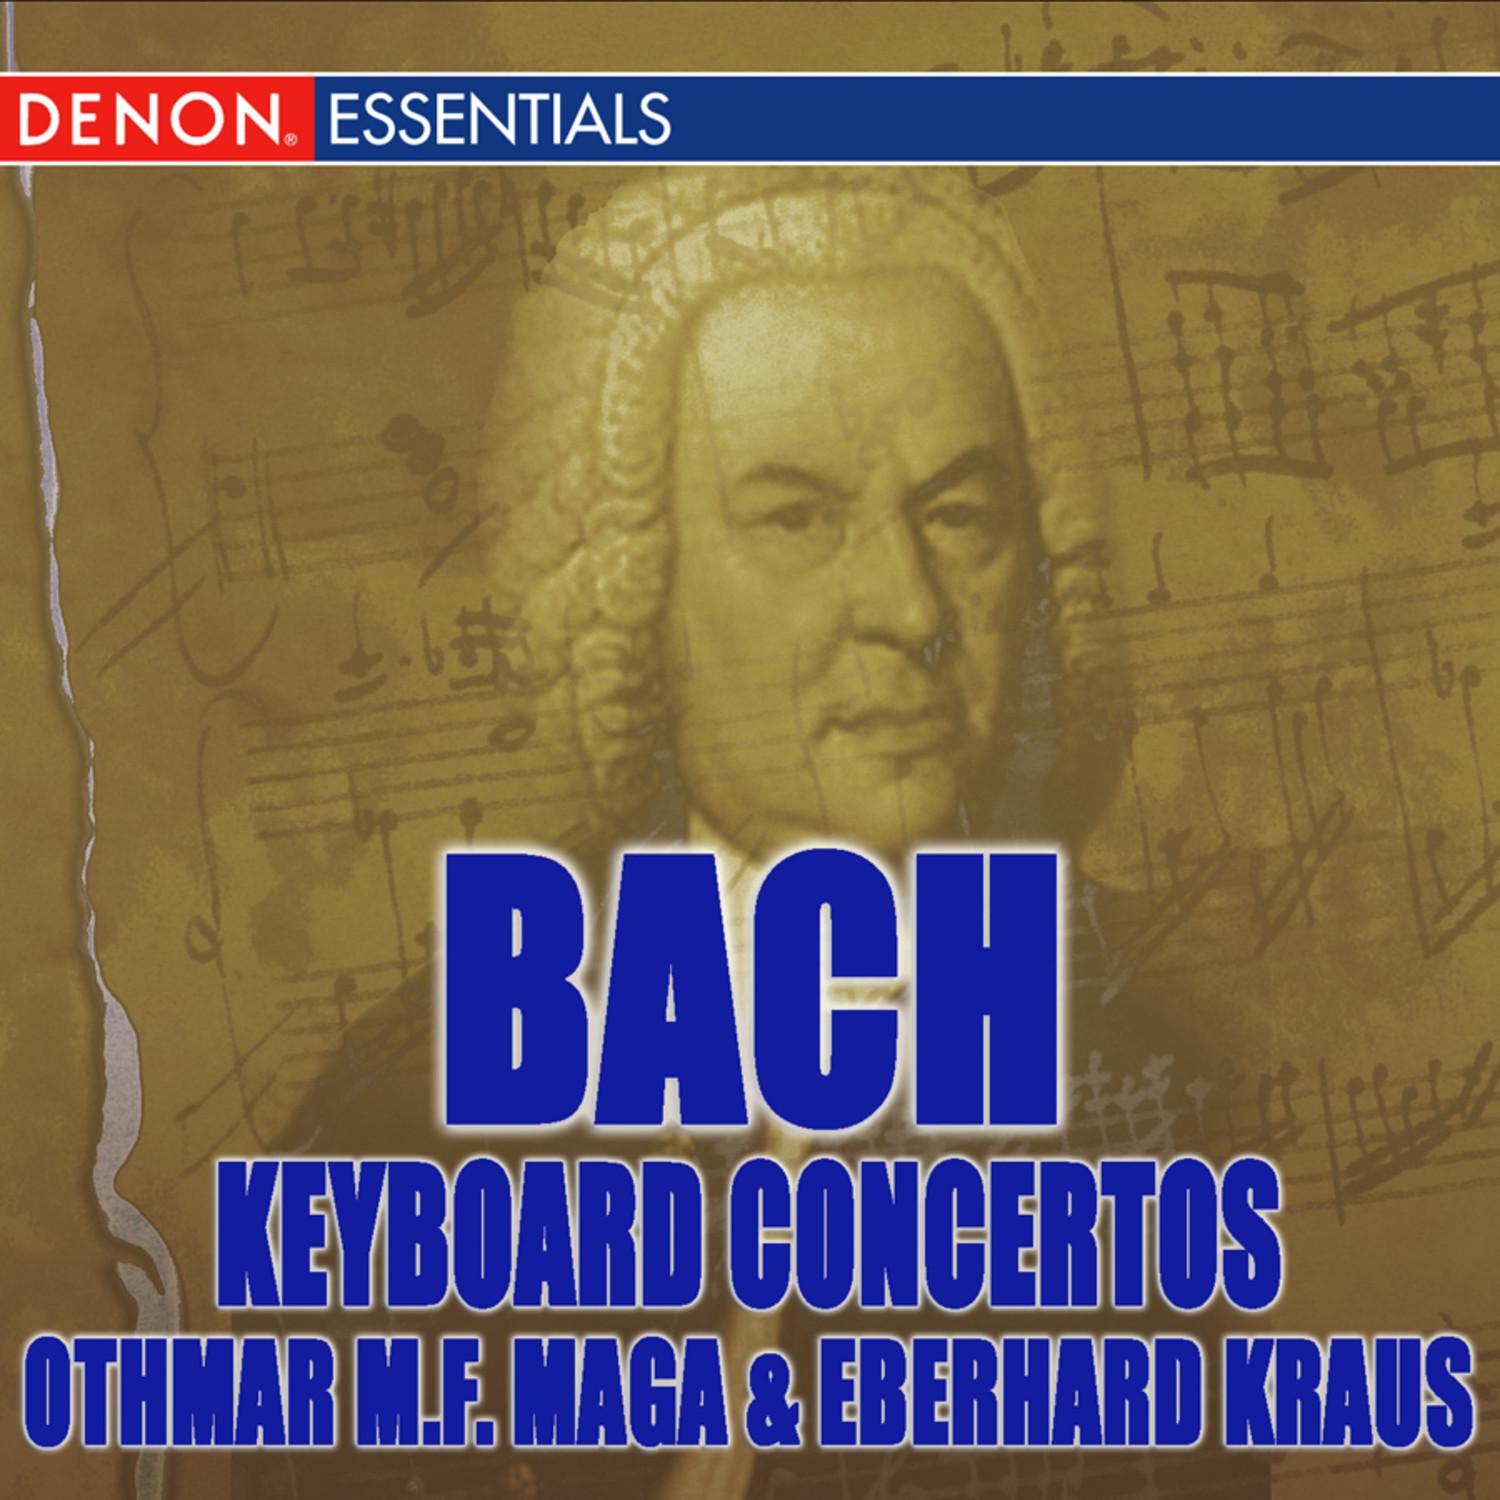 Concerto I for Harpsichord and Orchestra in D Minor, BWV 1052: II. Adagio